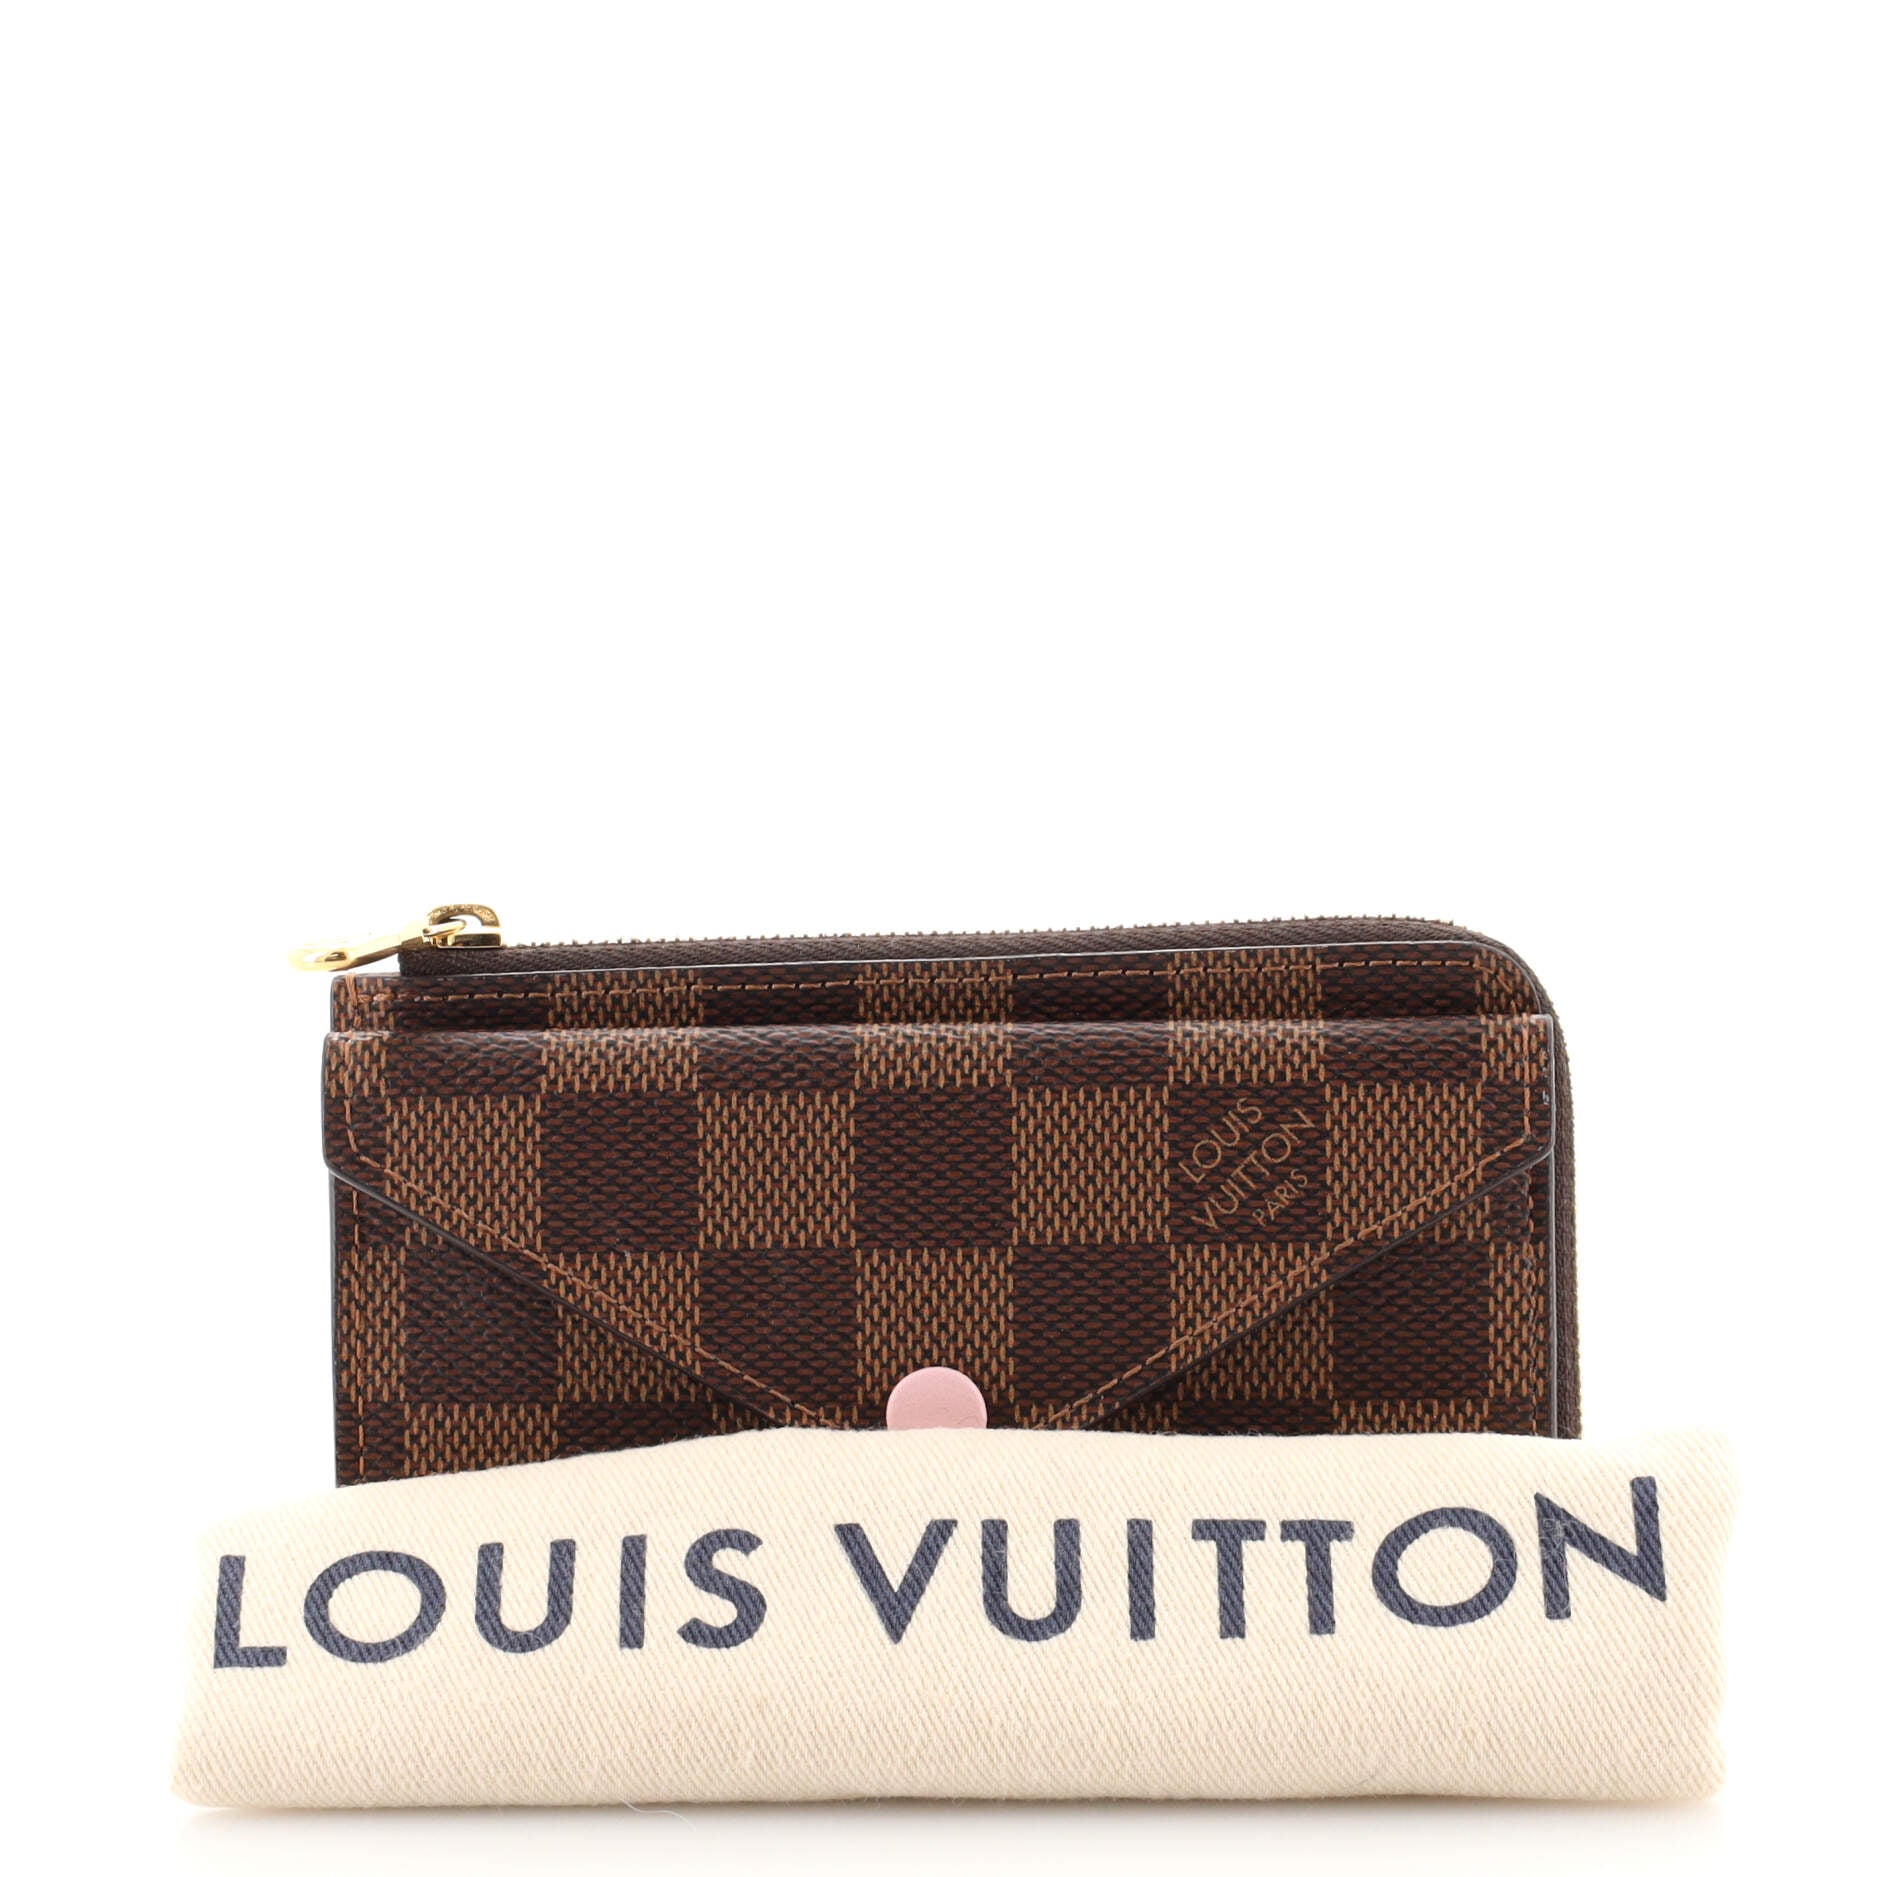 Pre-Owned Louis Vuitton Business Card Holder Amberop Cult de Visit